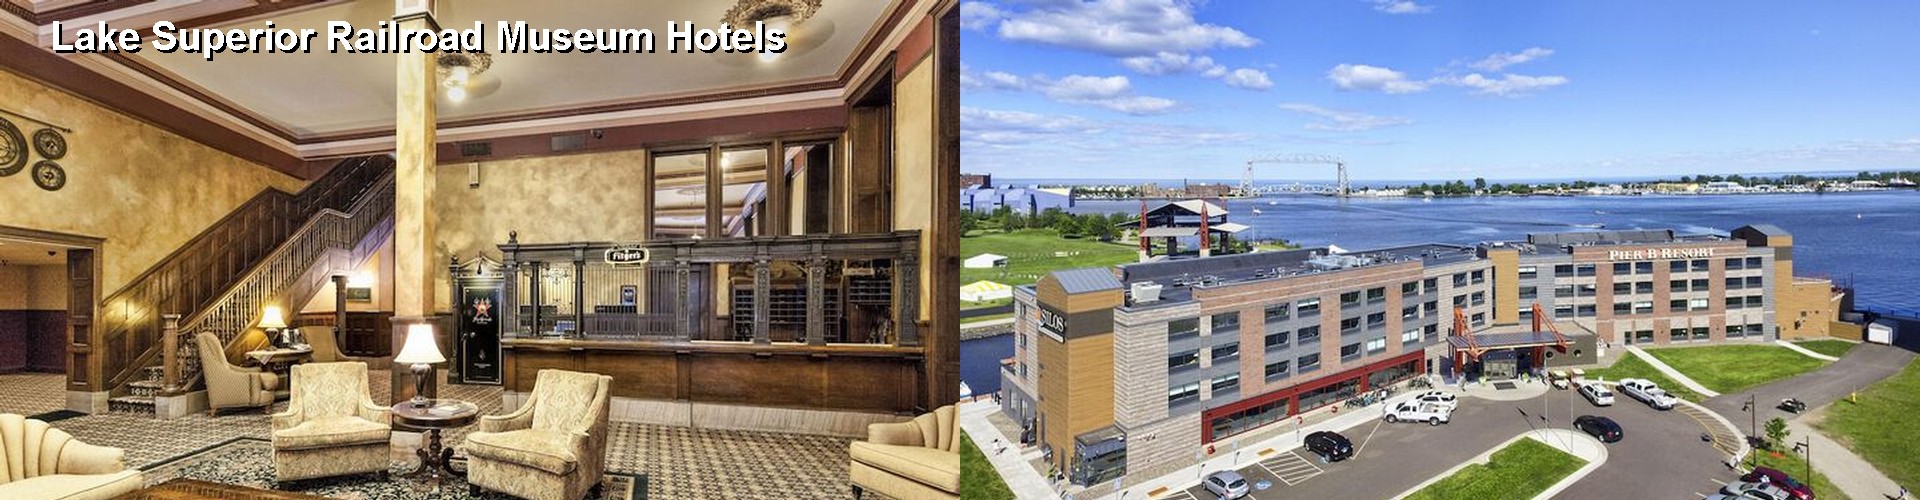 5 Best Hotels near Lake Superior Railroad Museum